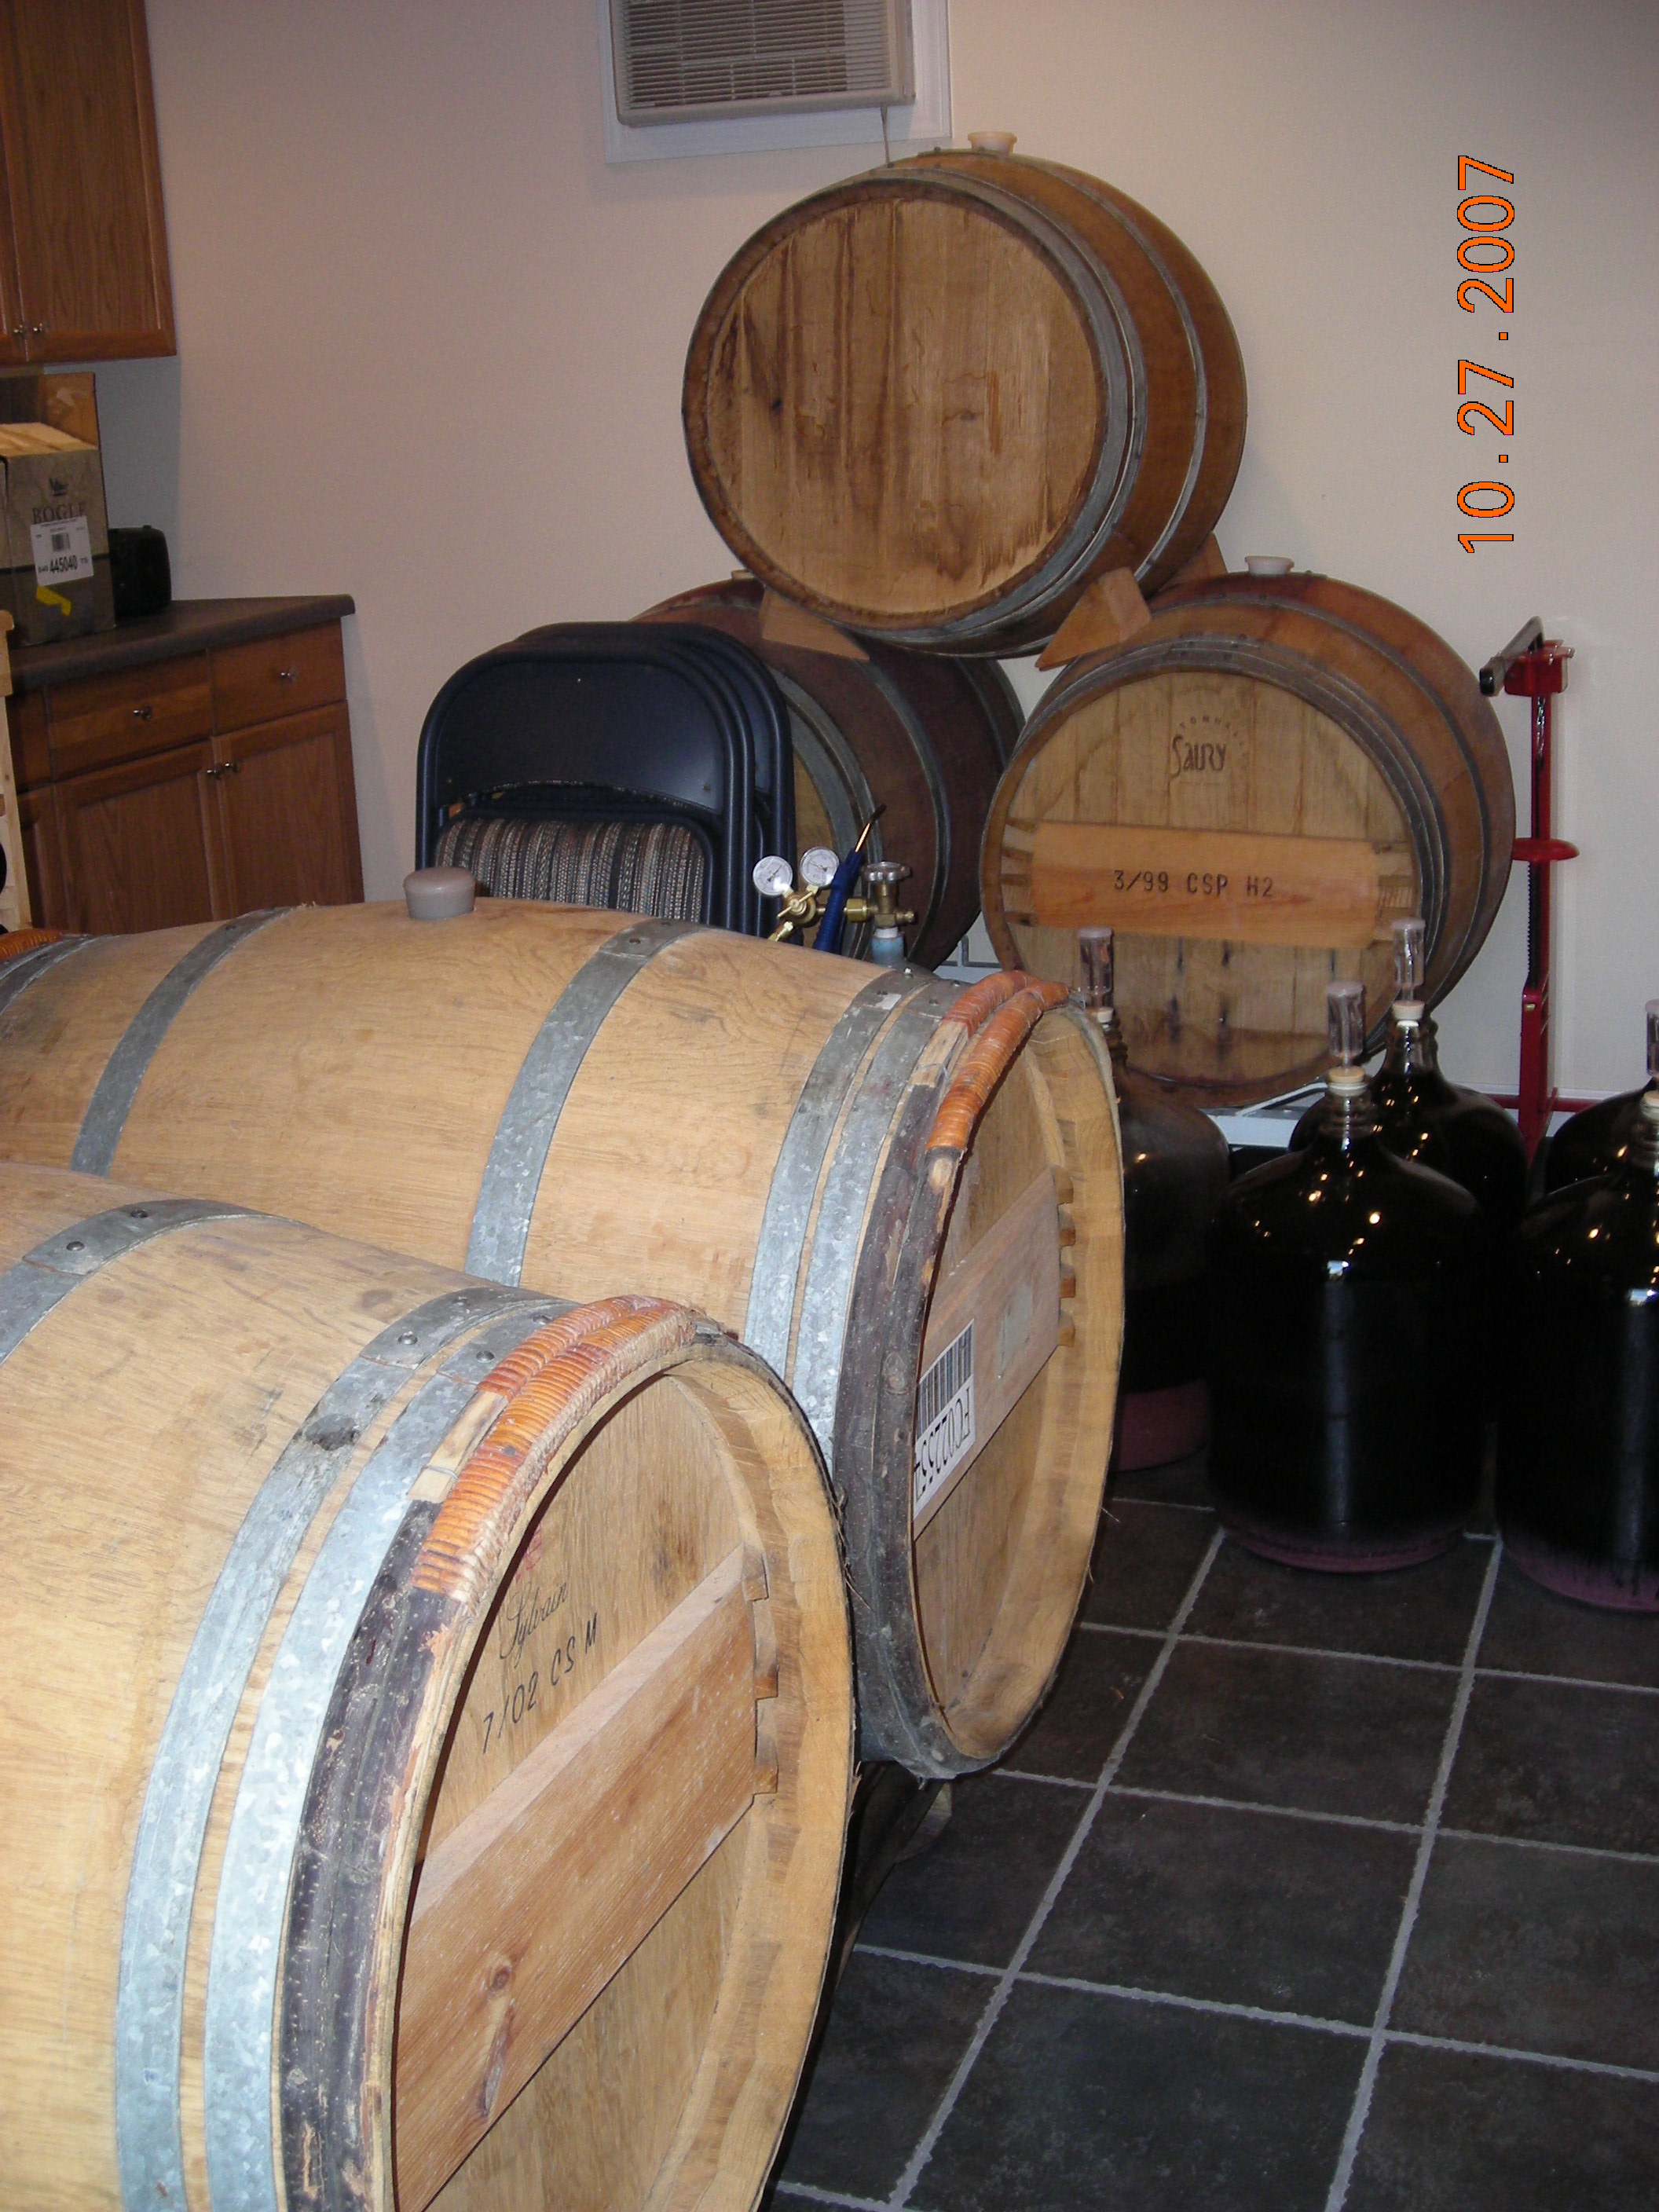 New barrels - purchased 10/24/07.